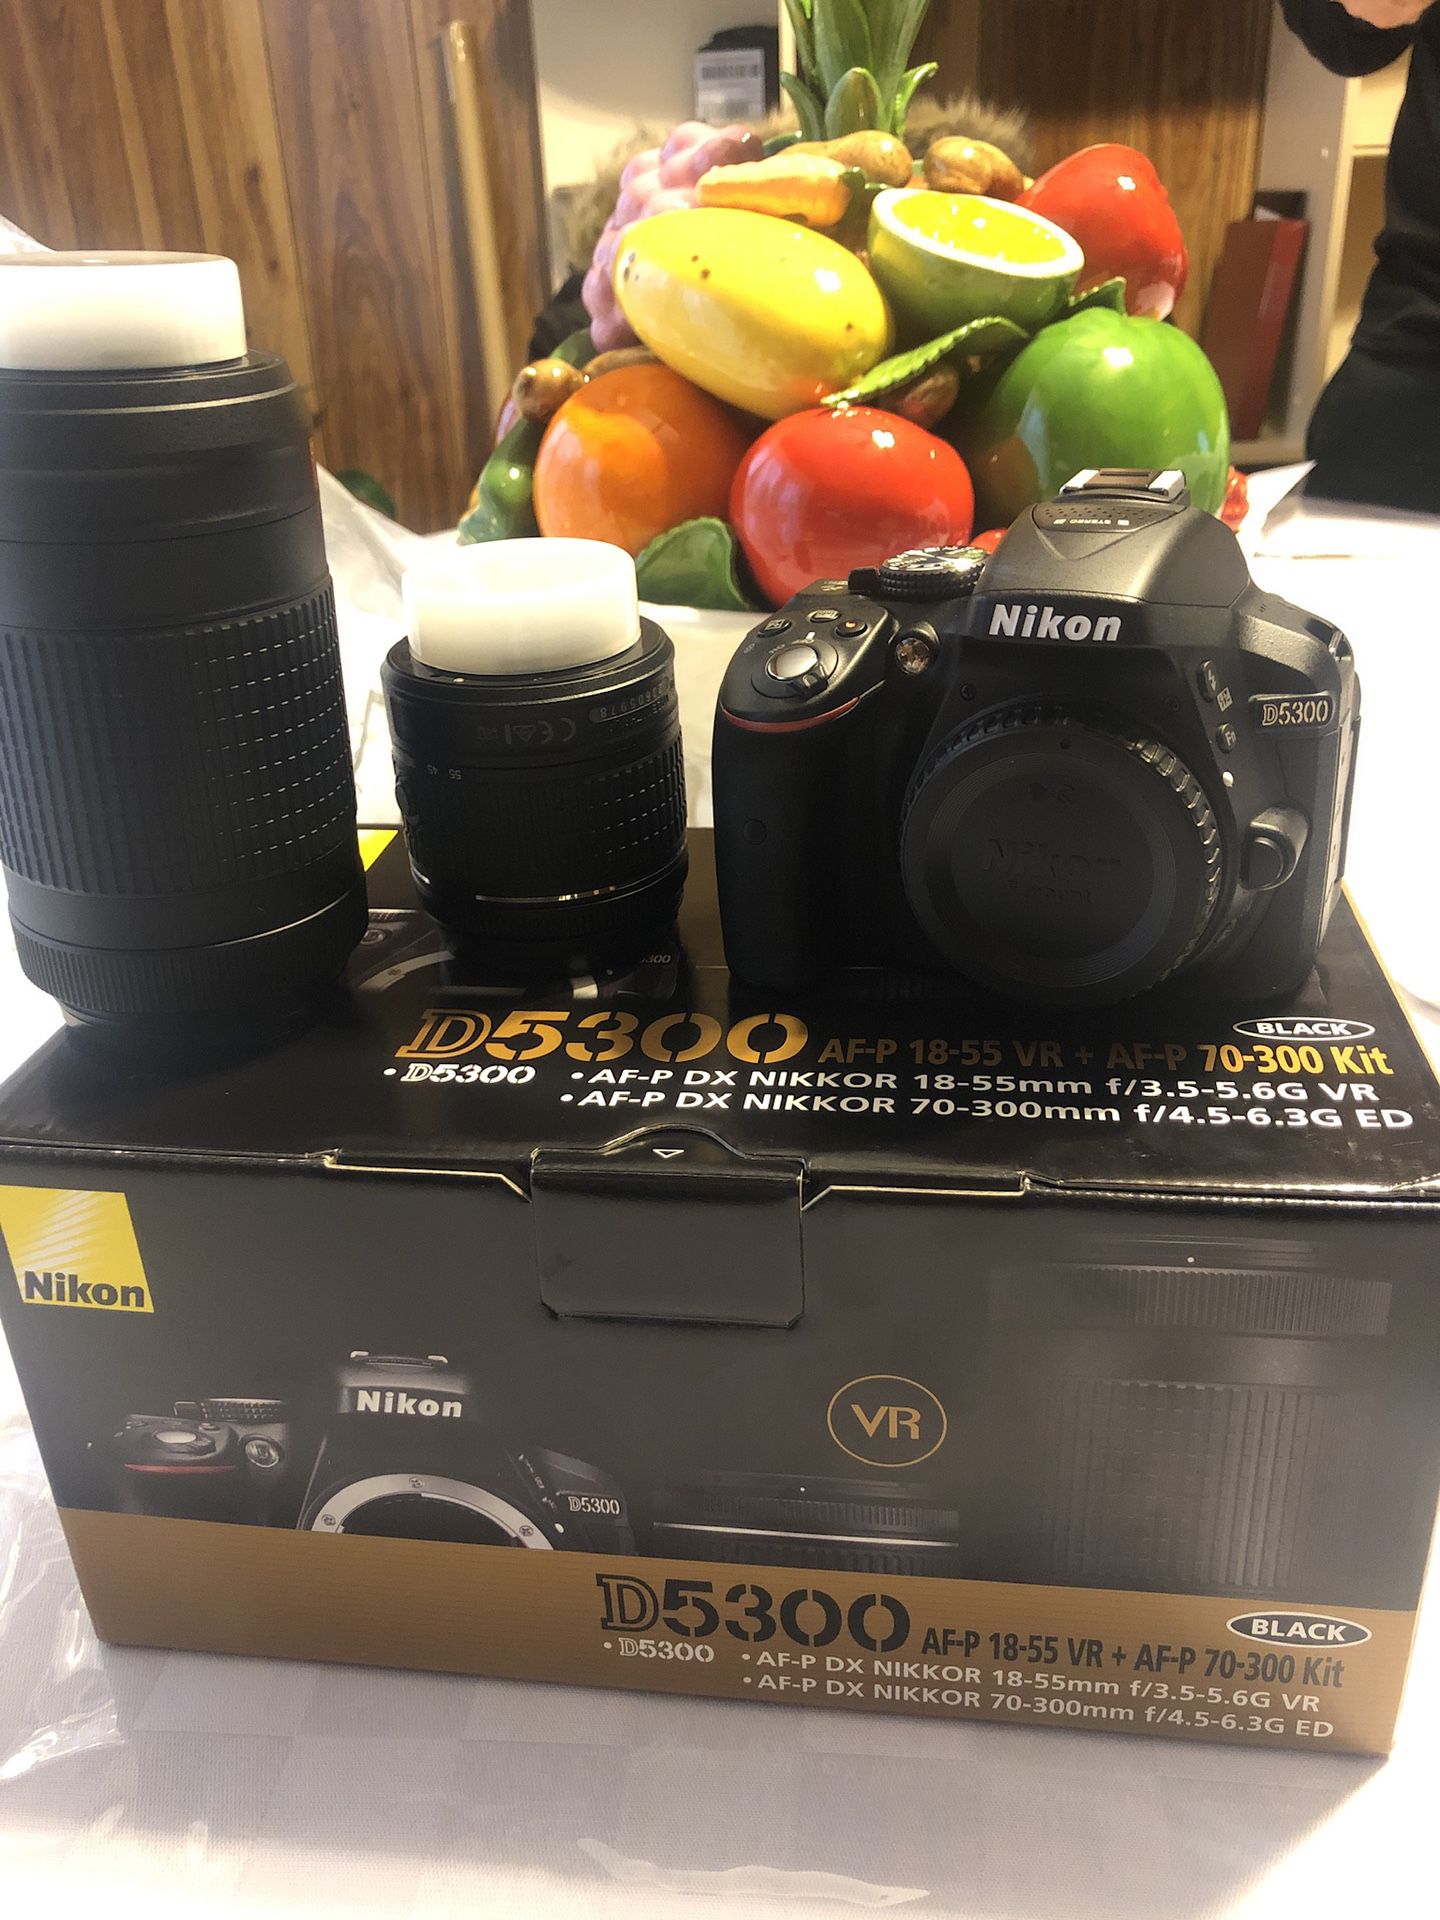 Nikon D5300 with lenses kit